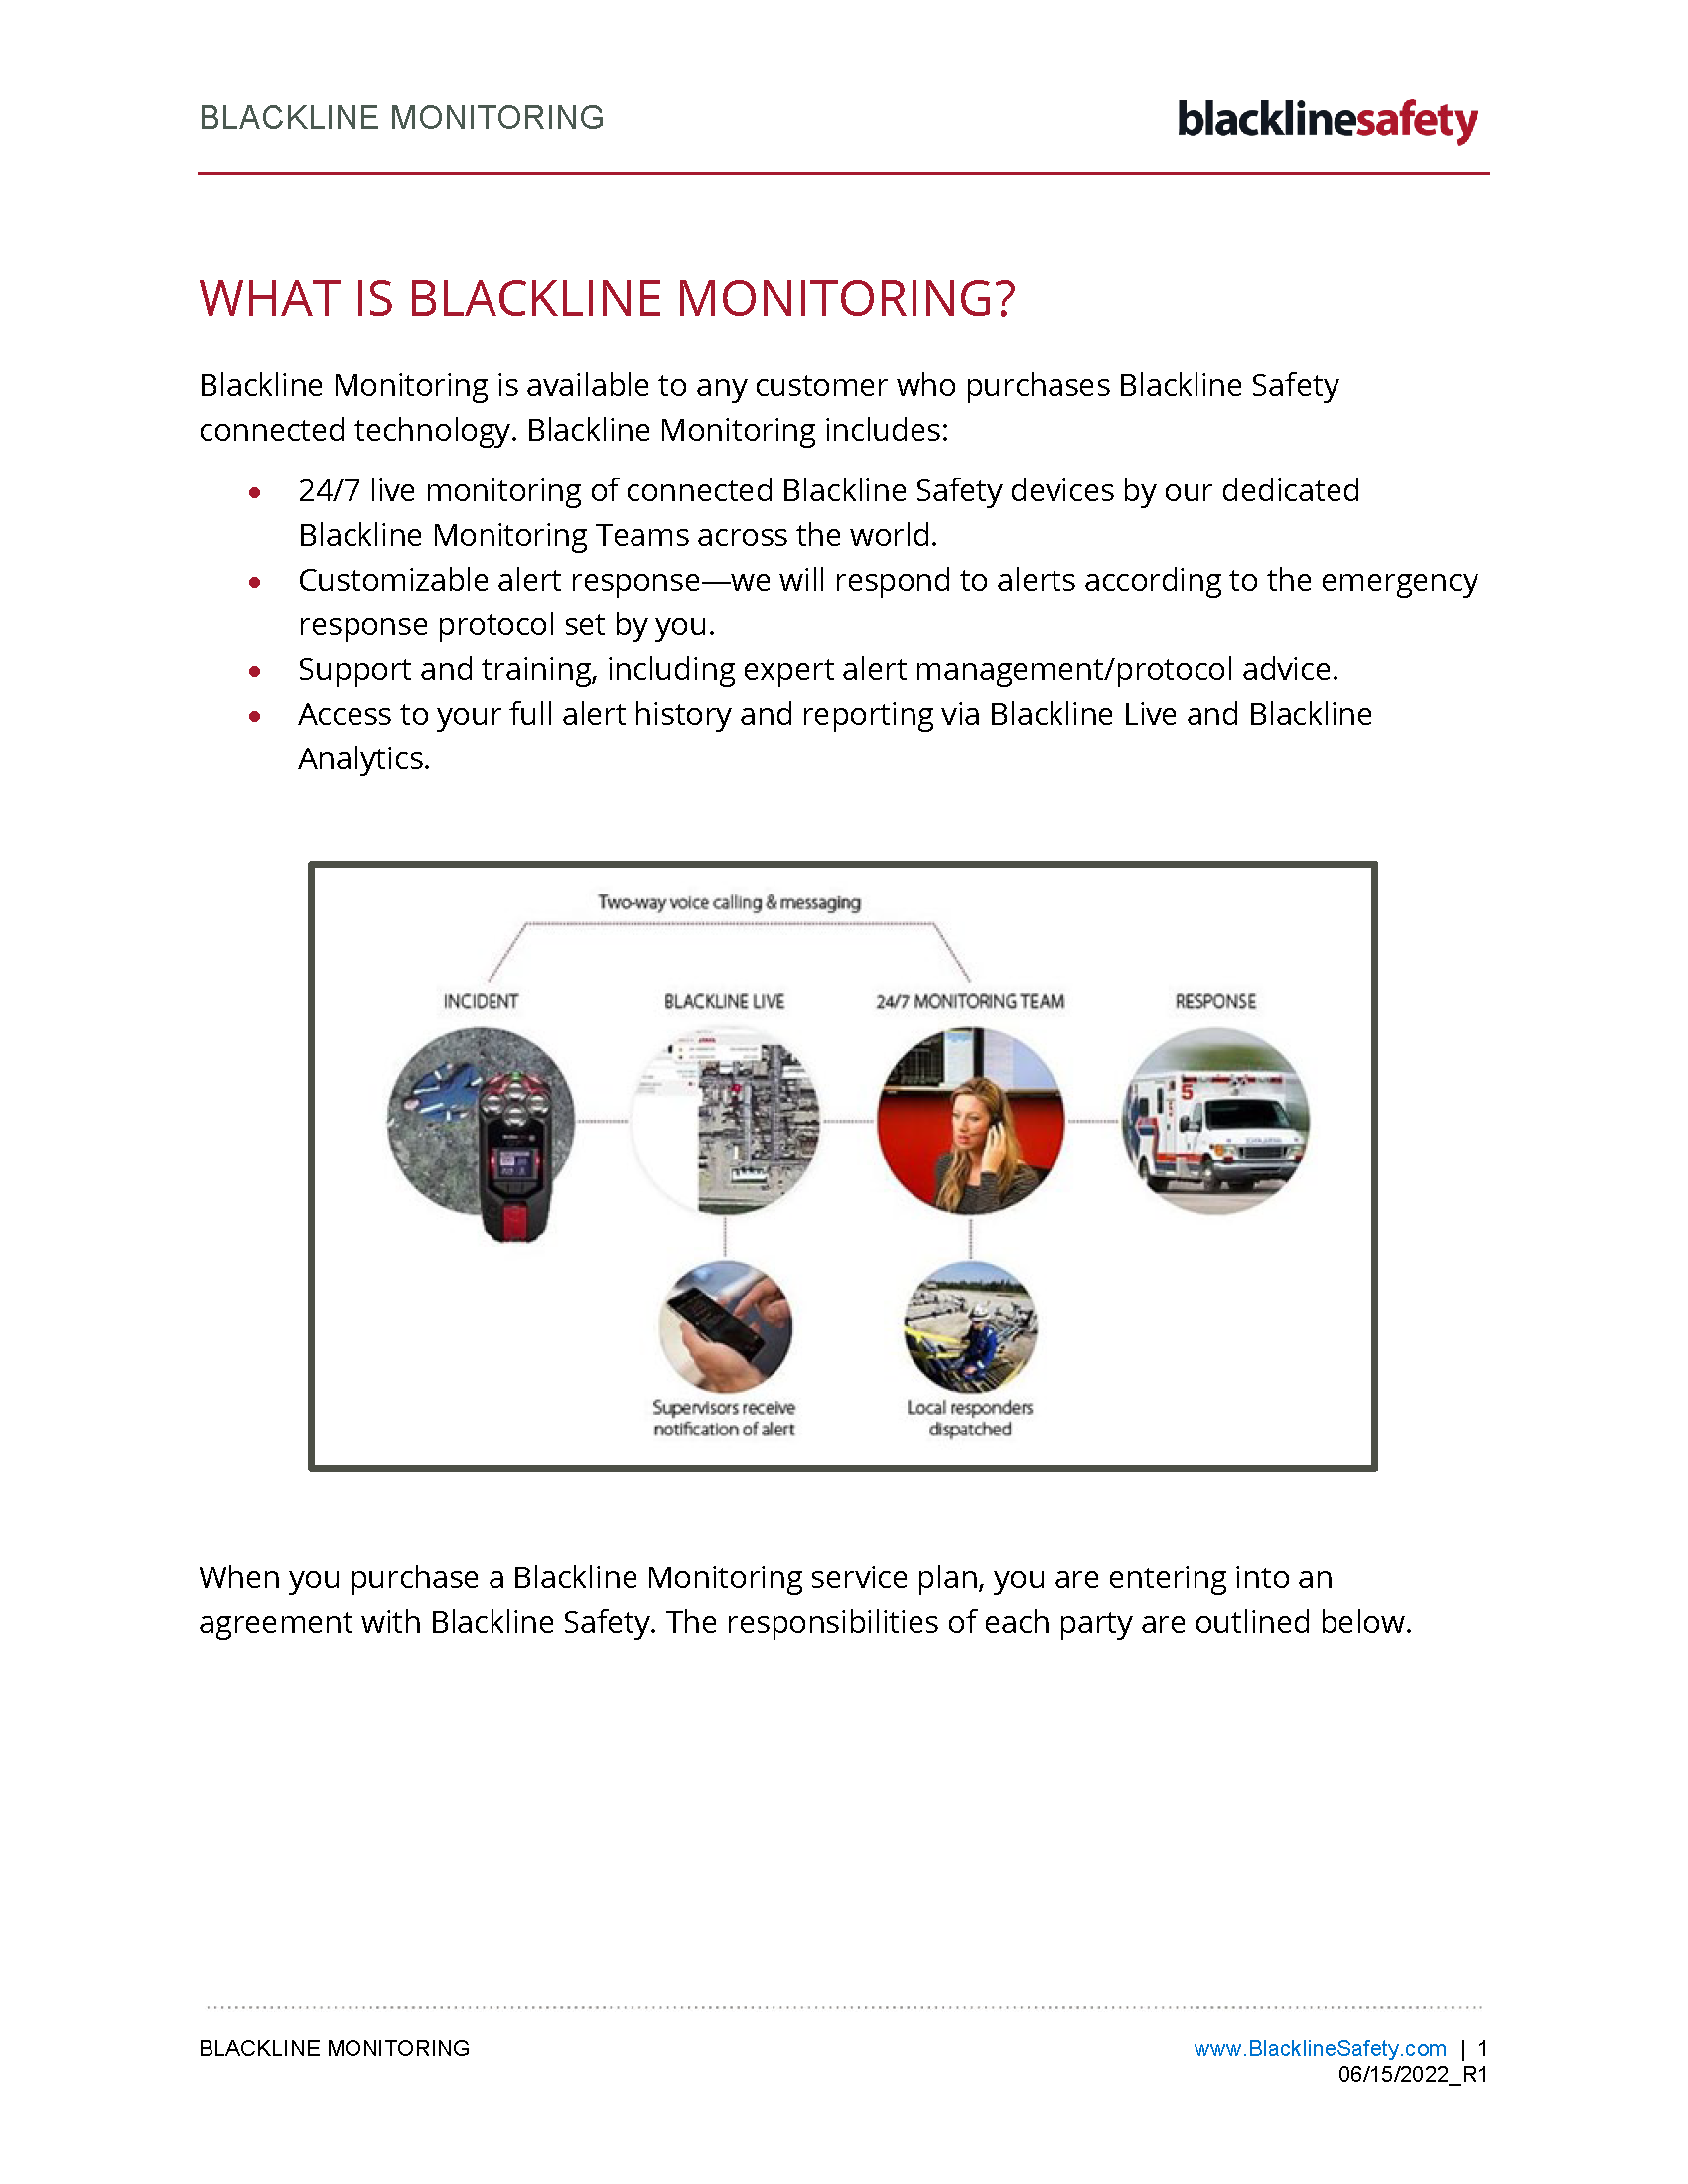 Blackline Monitoring - R1